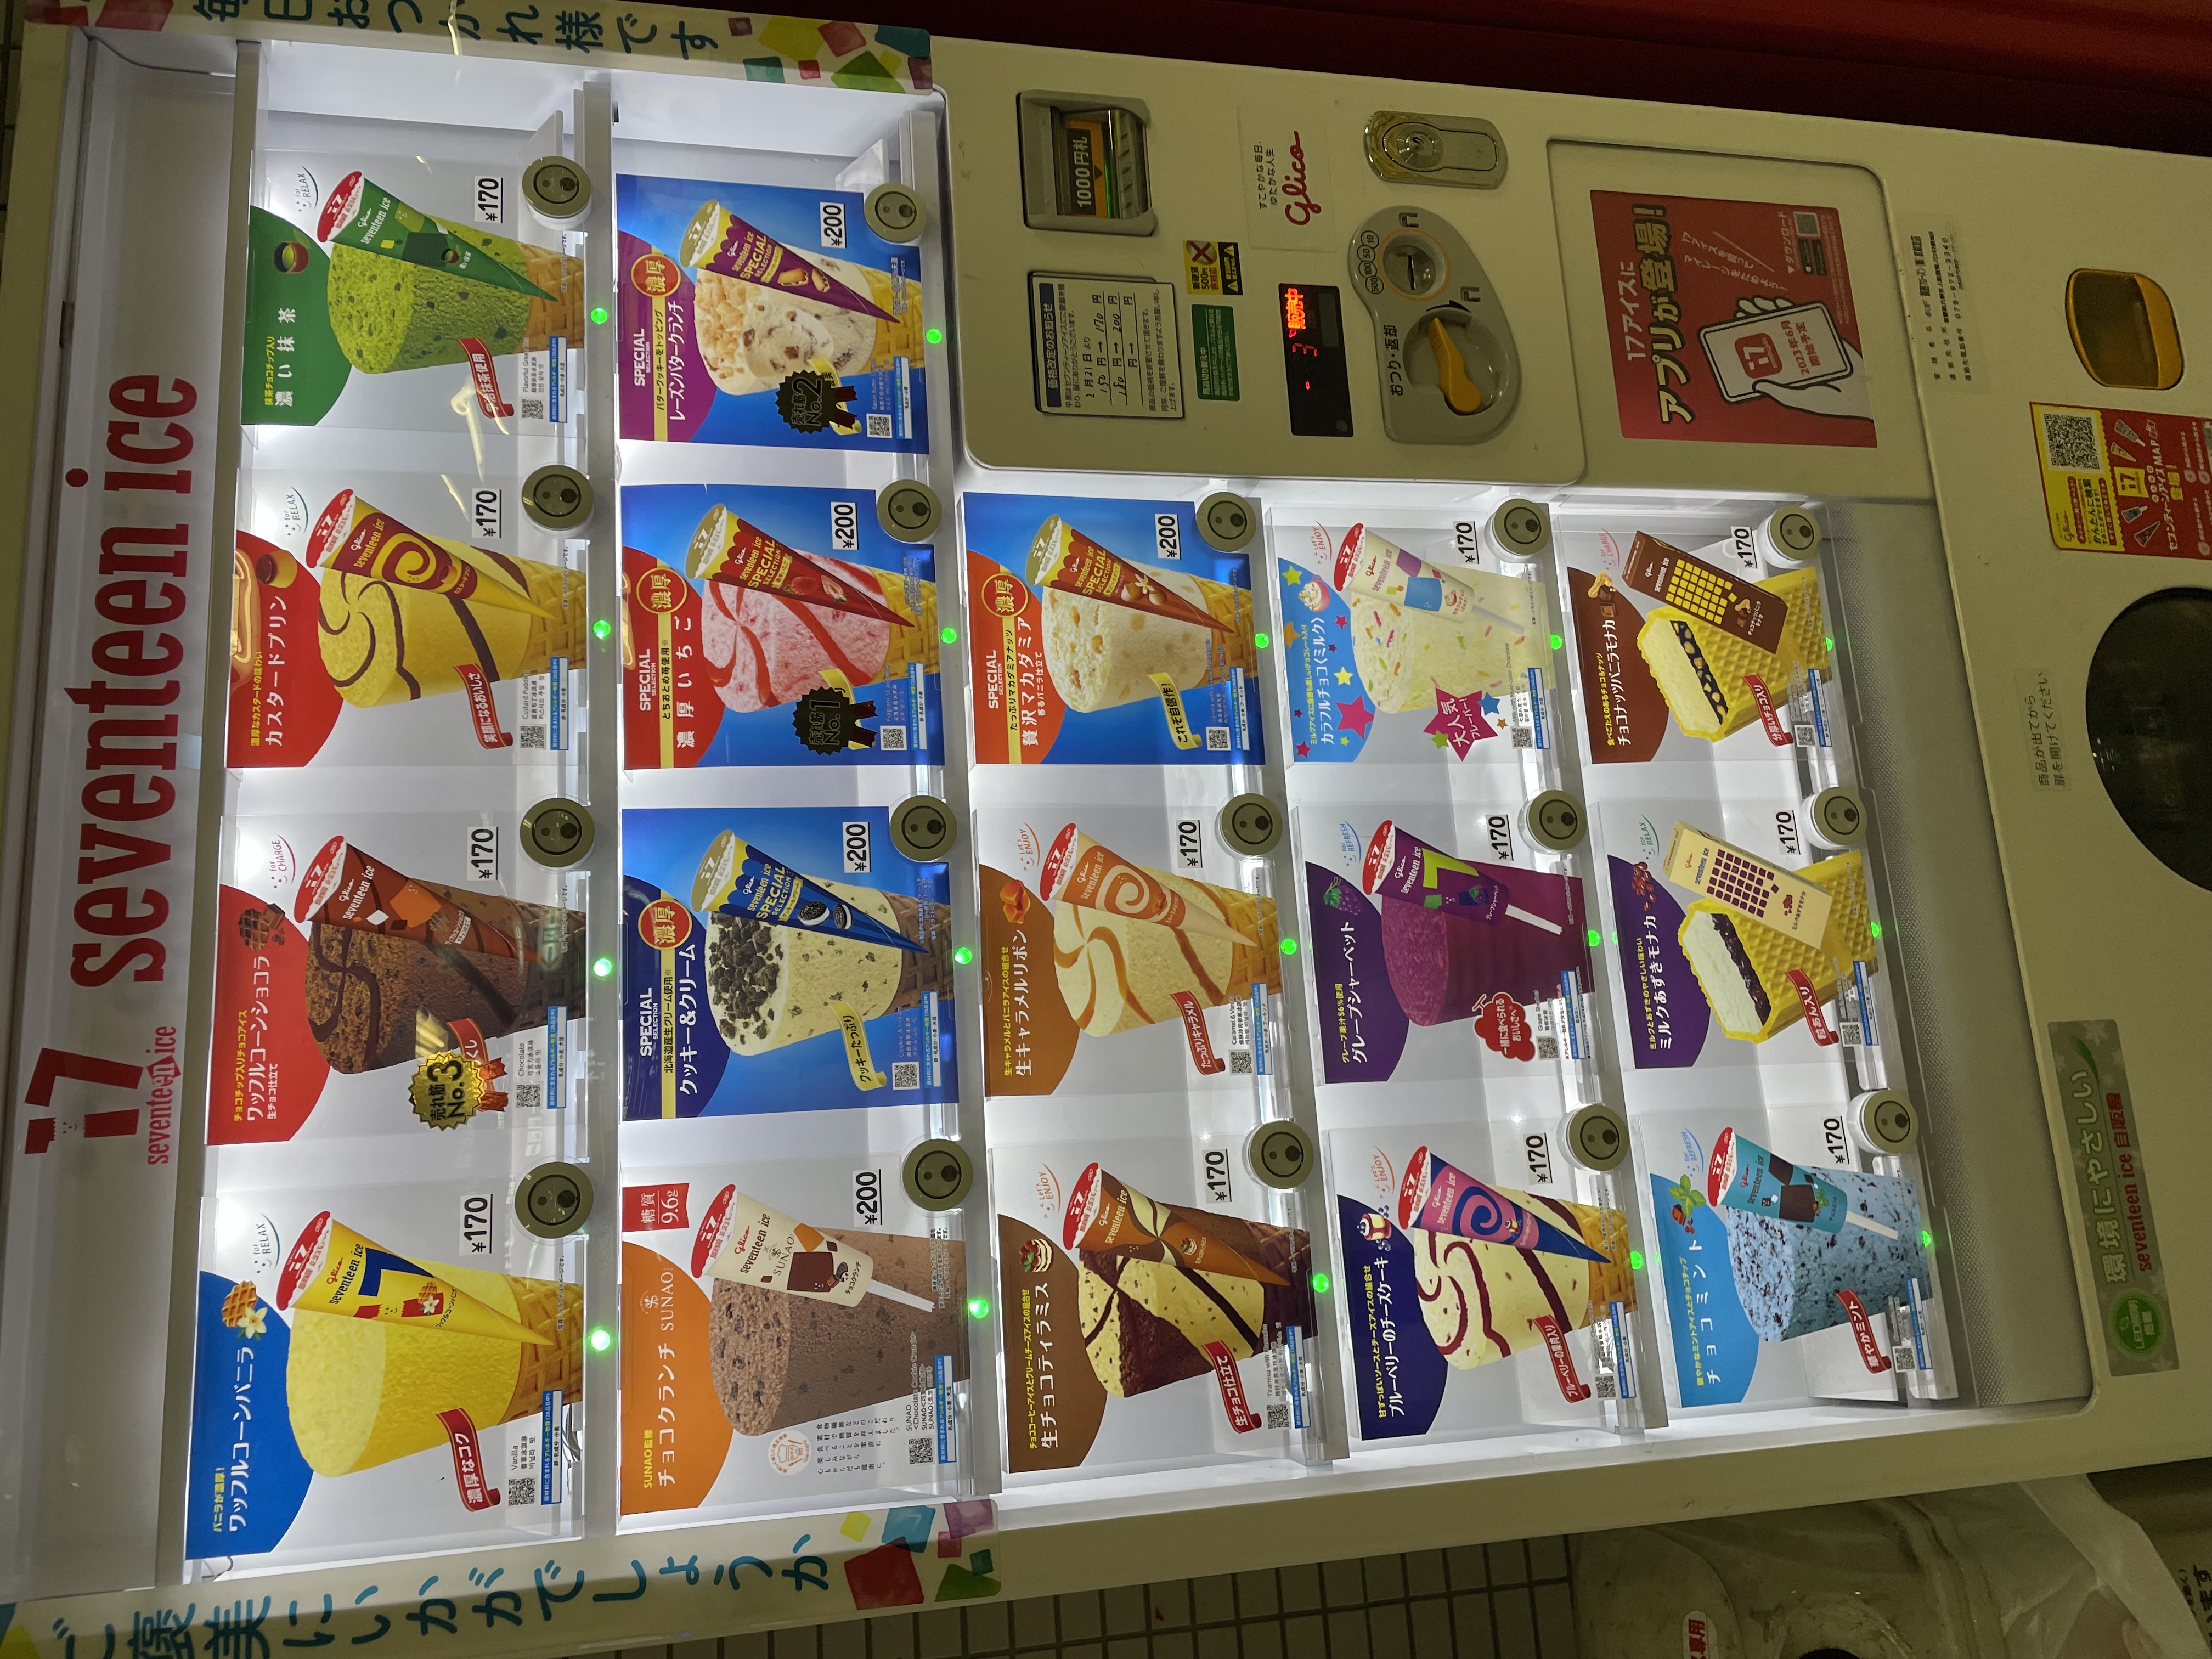 Vending machine with ice cream